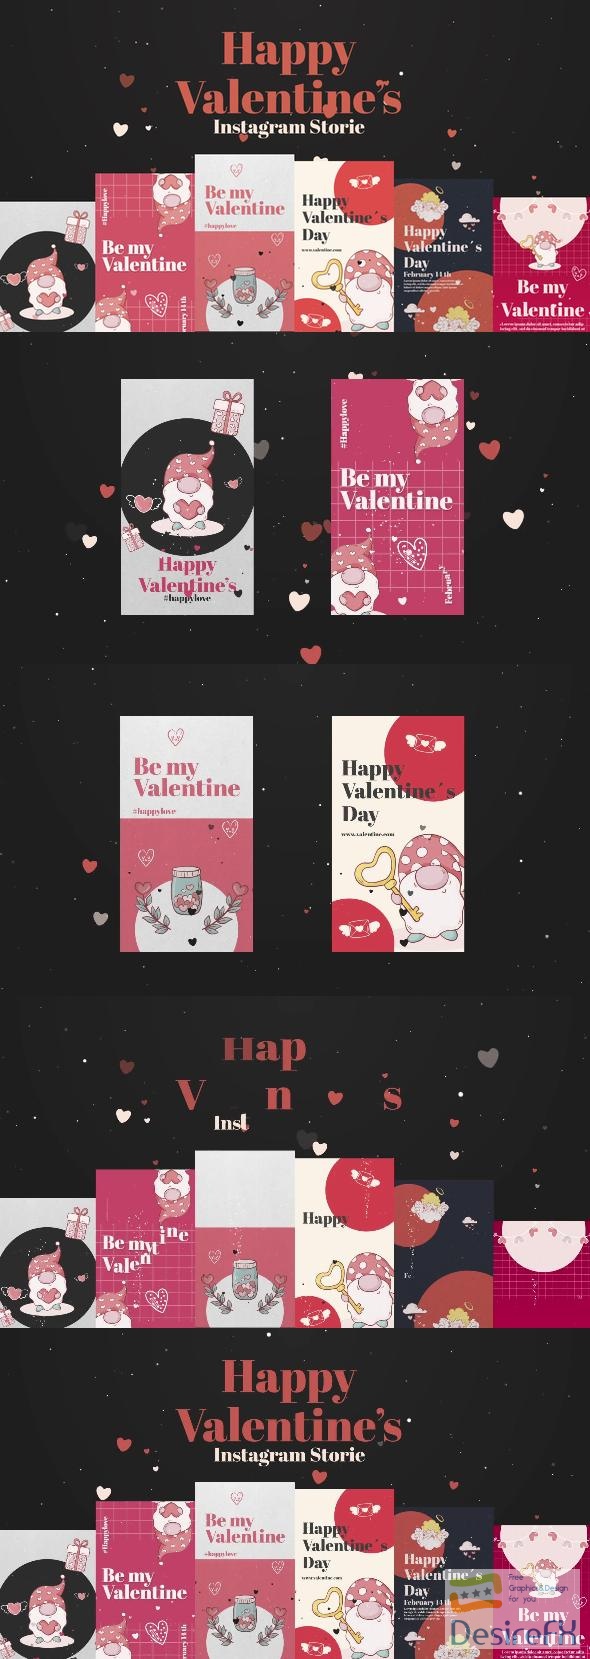 VideoHive Happy Valentines Instagram Storie 50302602